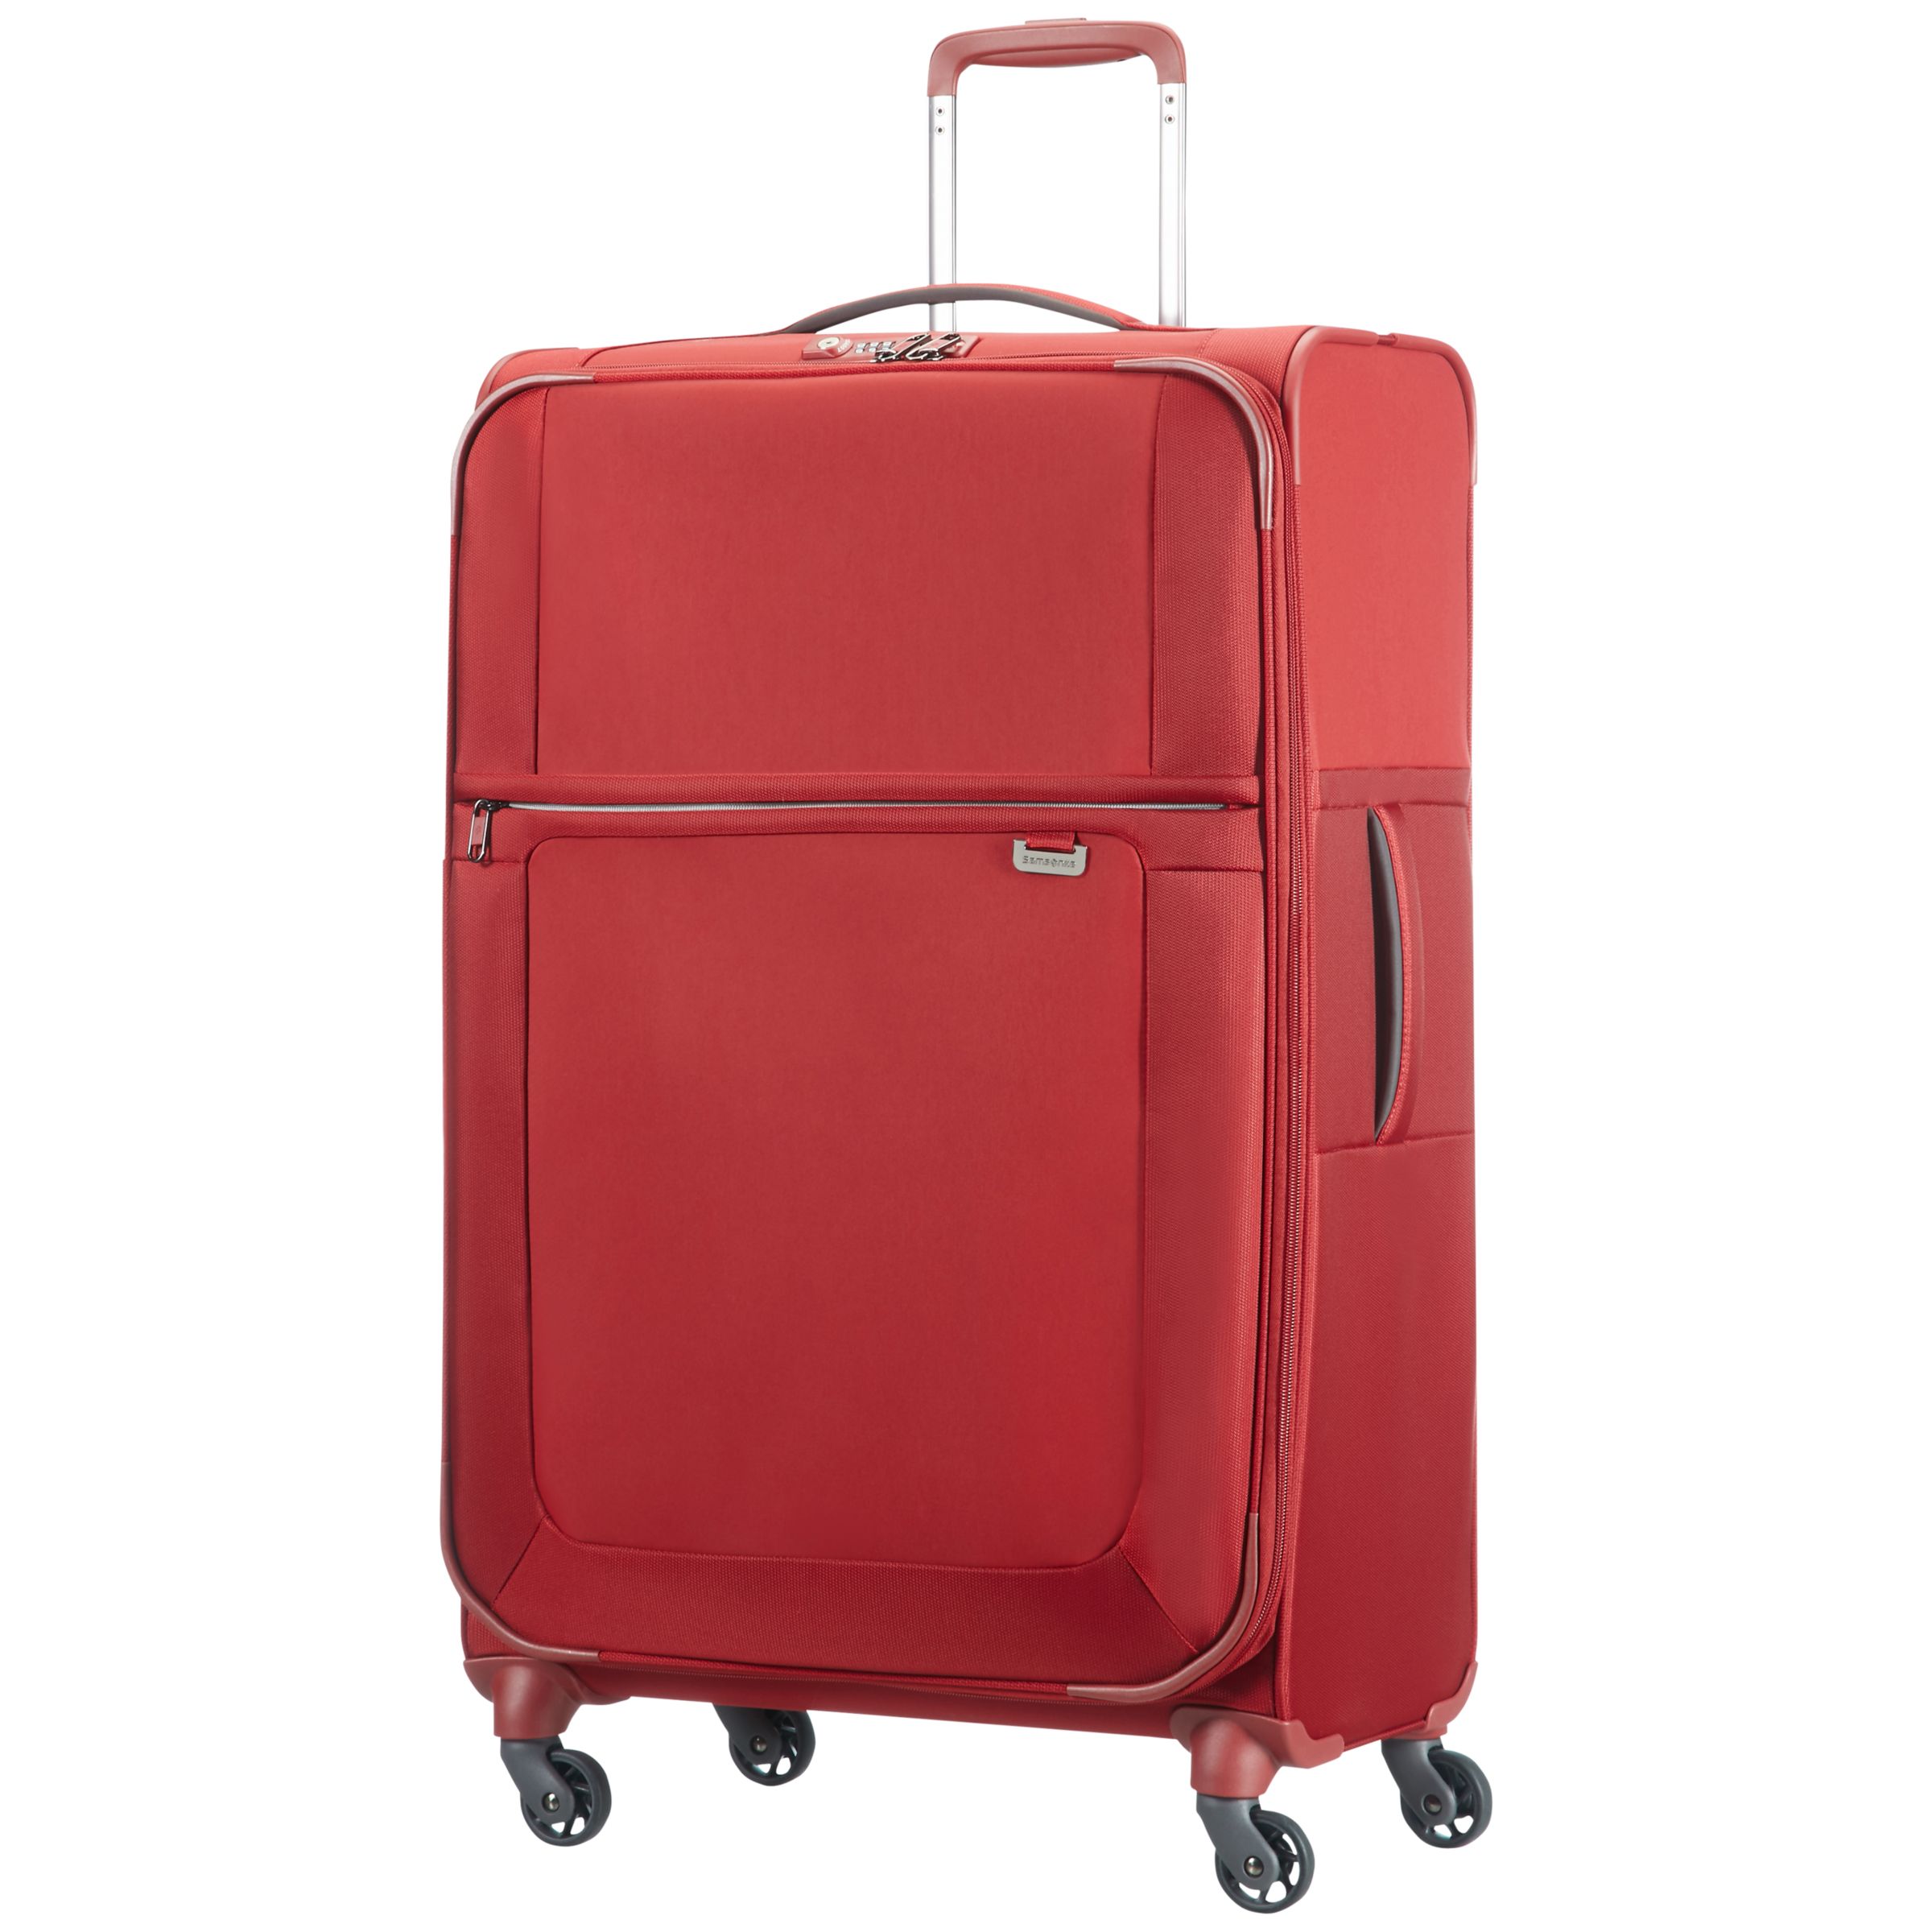 Samsonite Uplite 4-Wheel 78cm Spinner Suitcase, Red